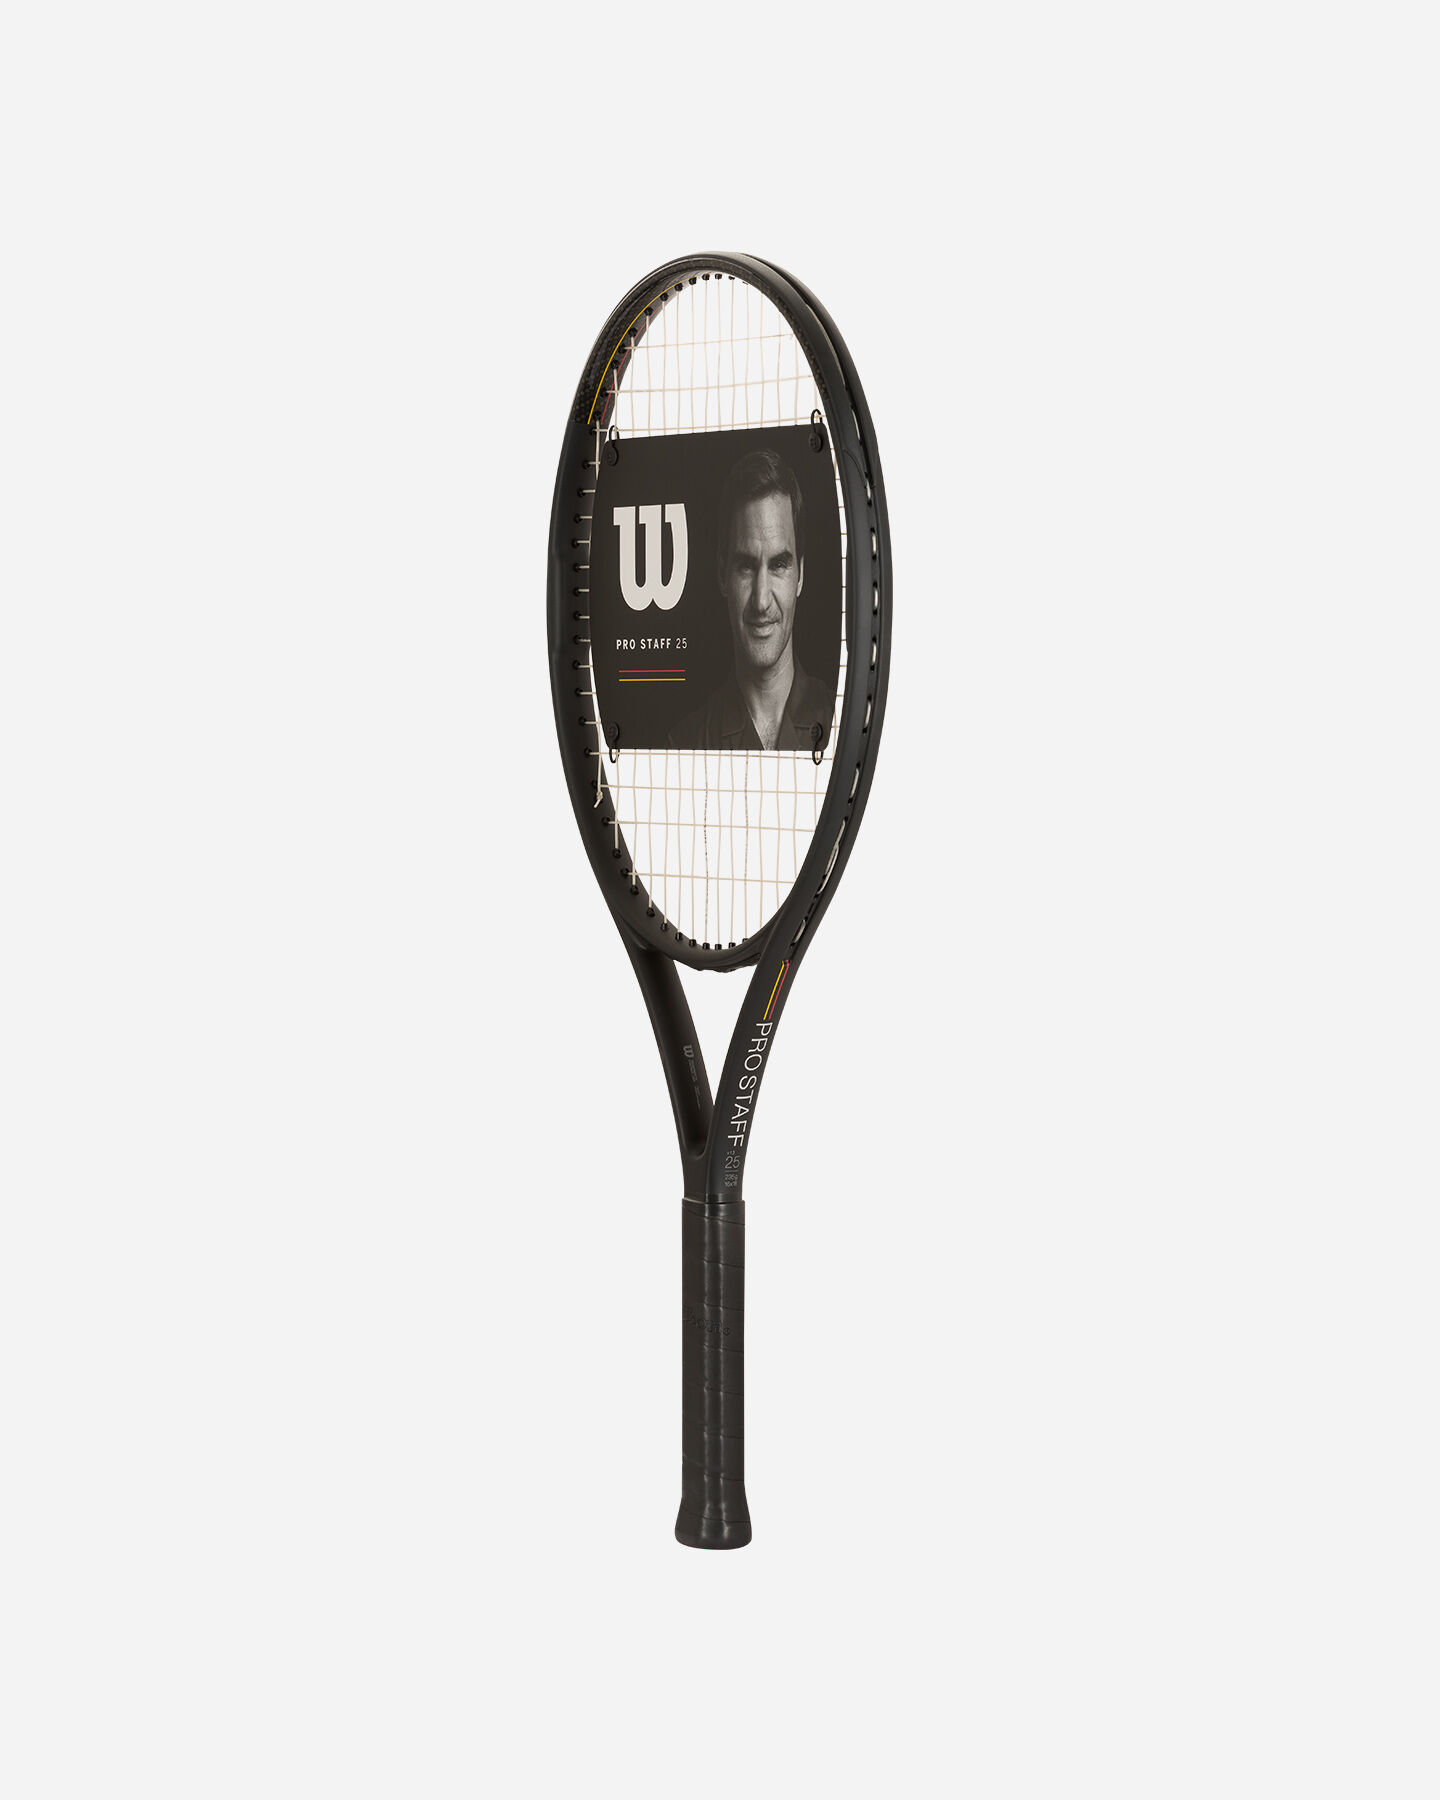  Racchetta tennis WILSON PRO STAFF 25 V13.0 JR S5344210|UNI|25 scatto 1